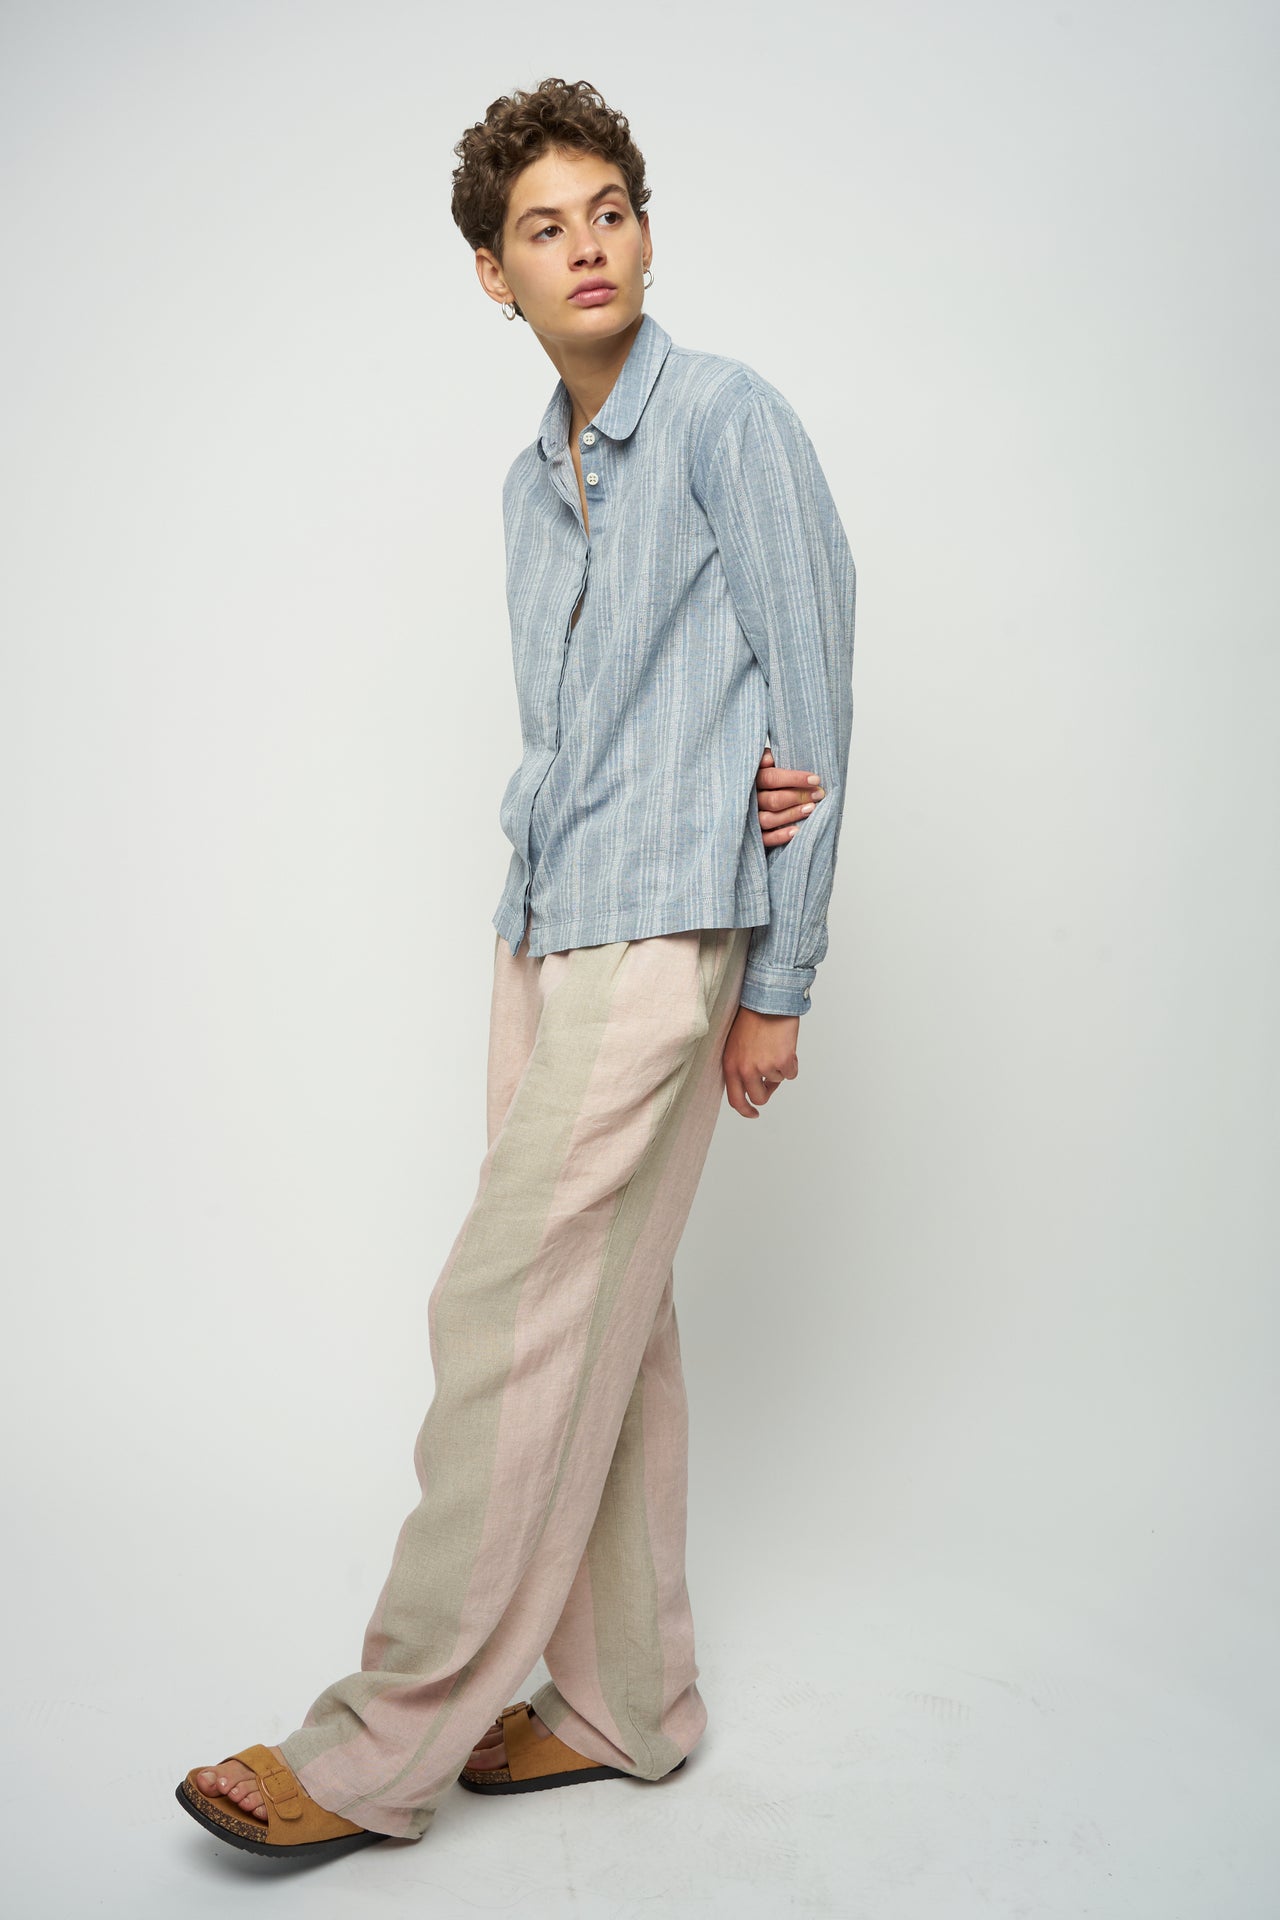 Cute Round Collar Shirt in a Blue Striped Japanese Organic Jacquard Cotton